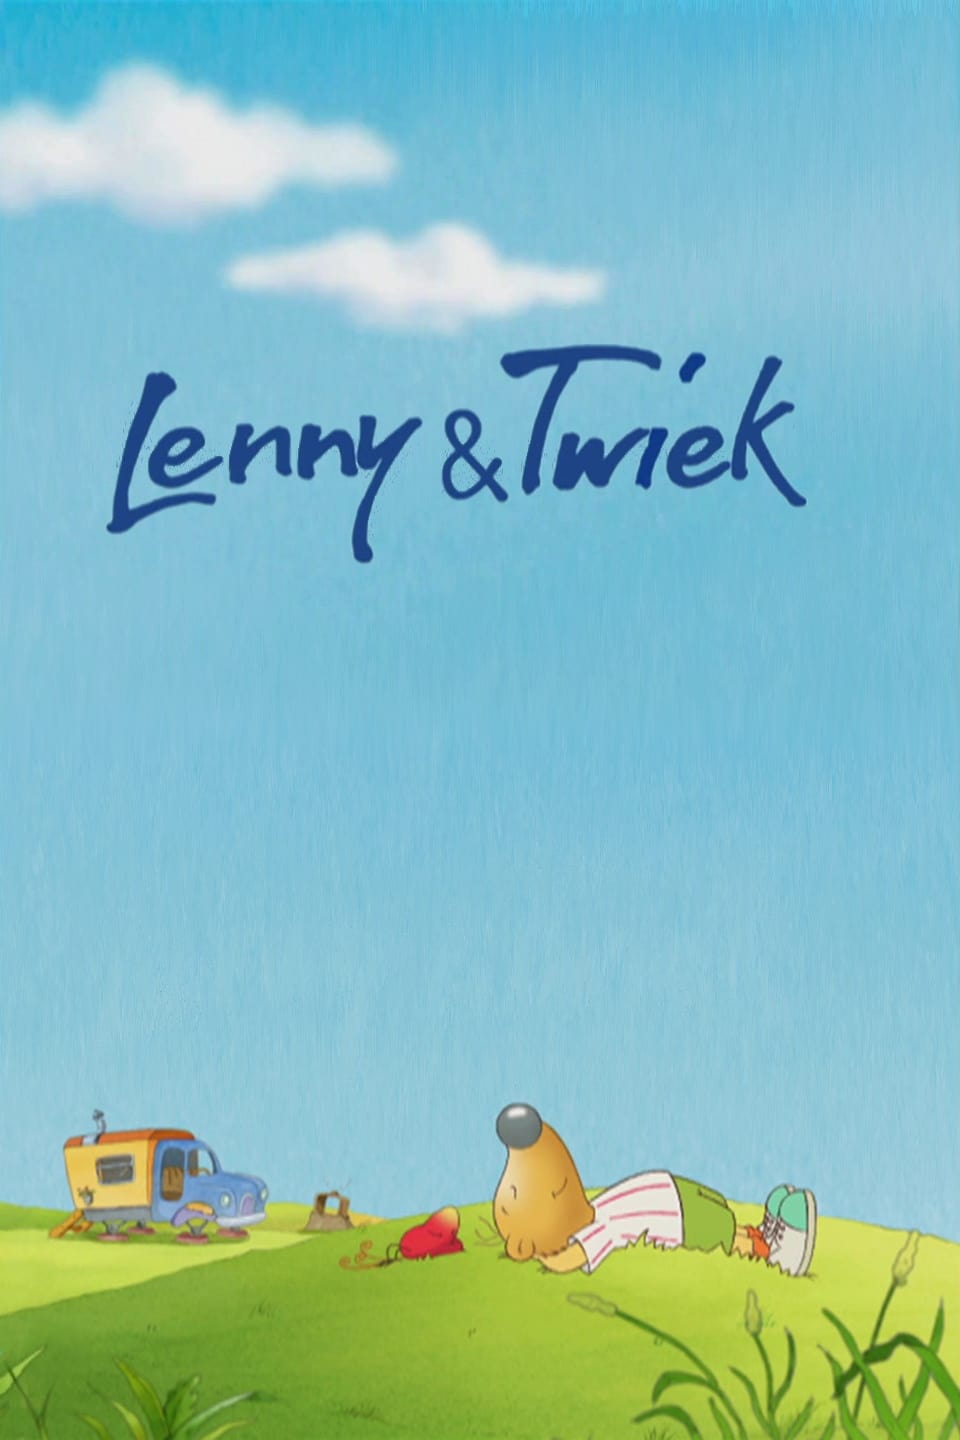 Lenny & Twiek